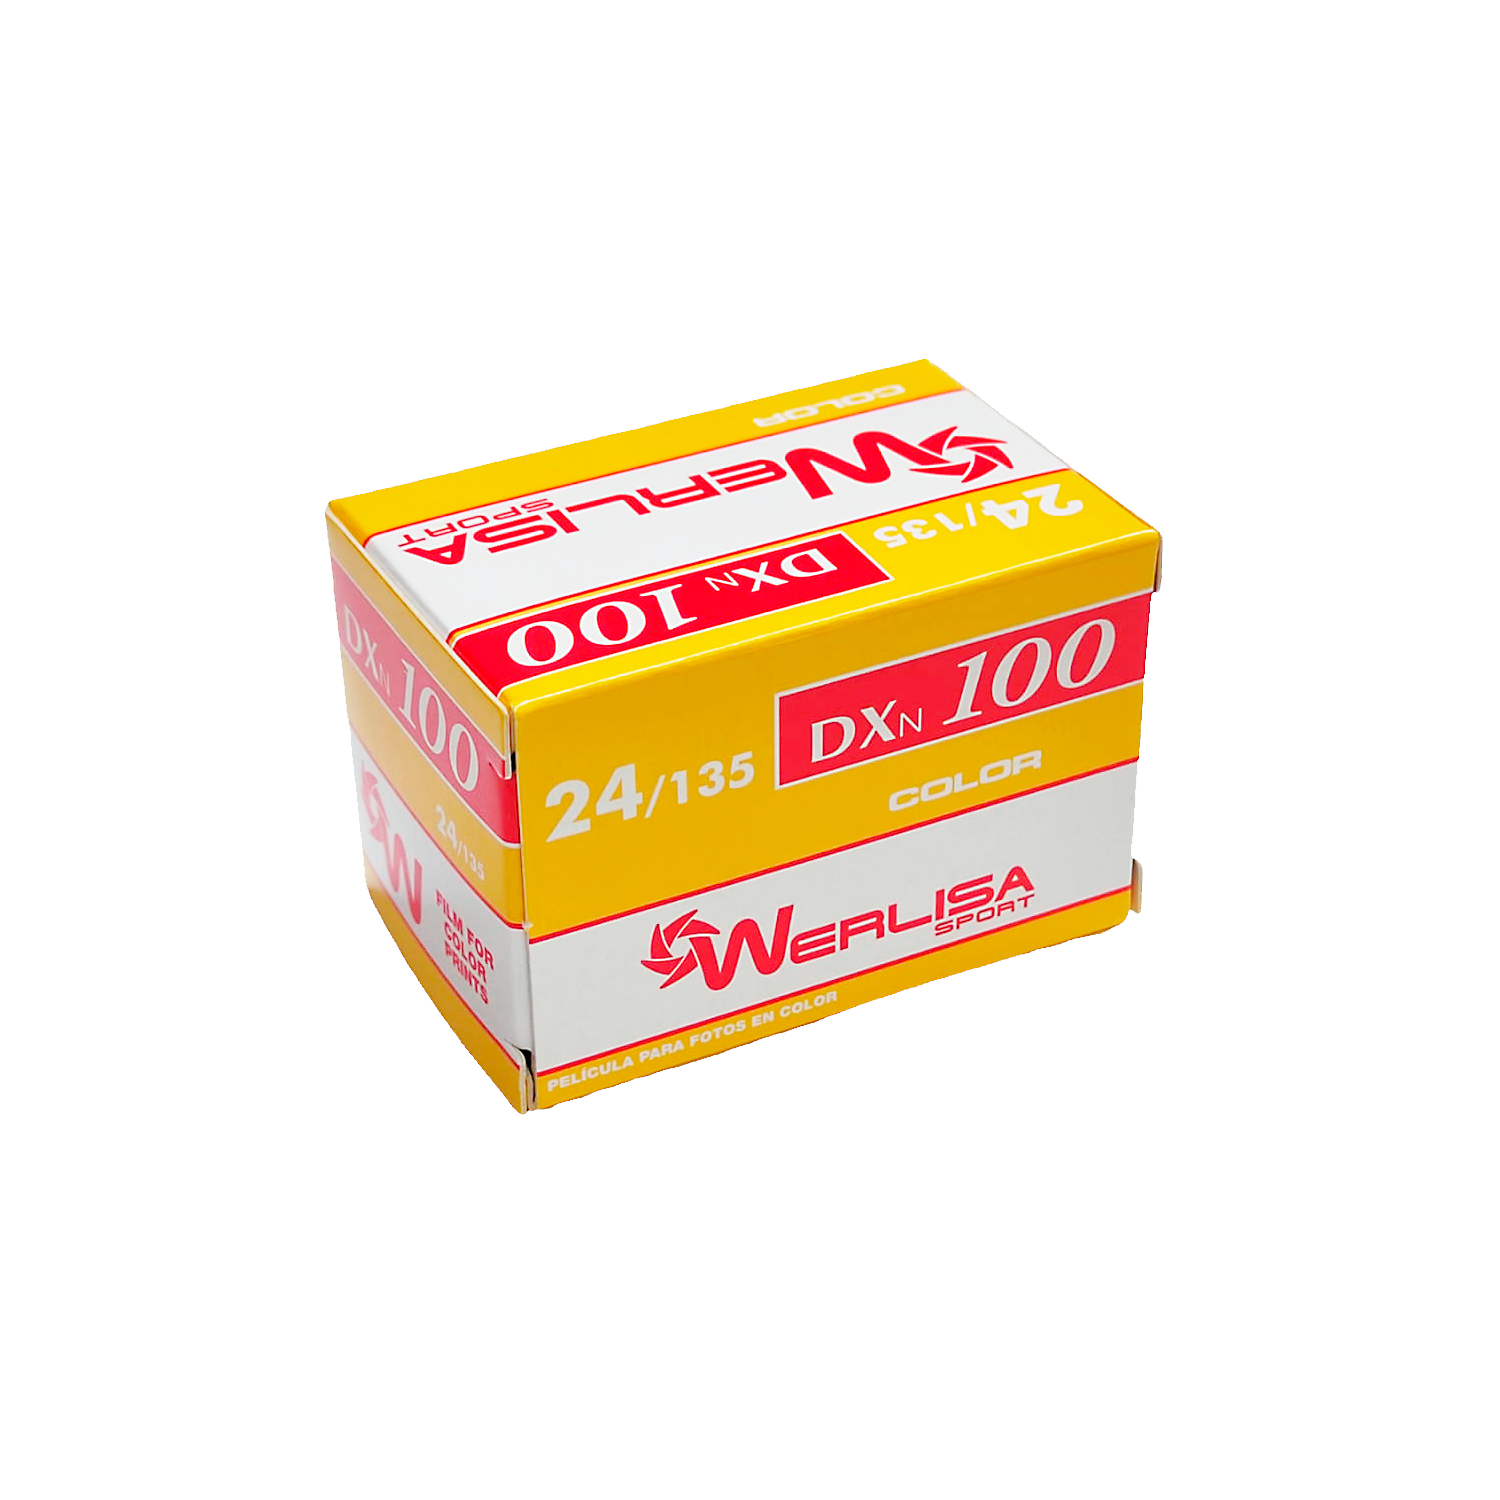 Werlisa 100 caducada - 35mm